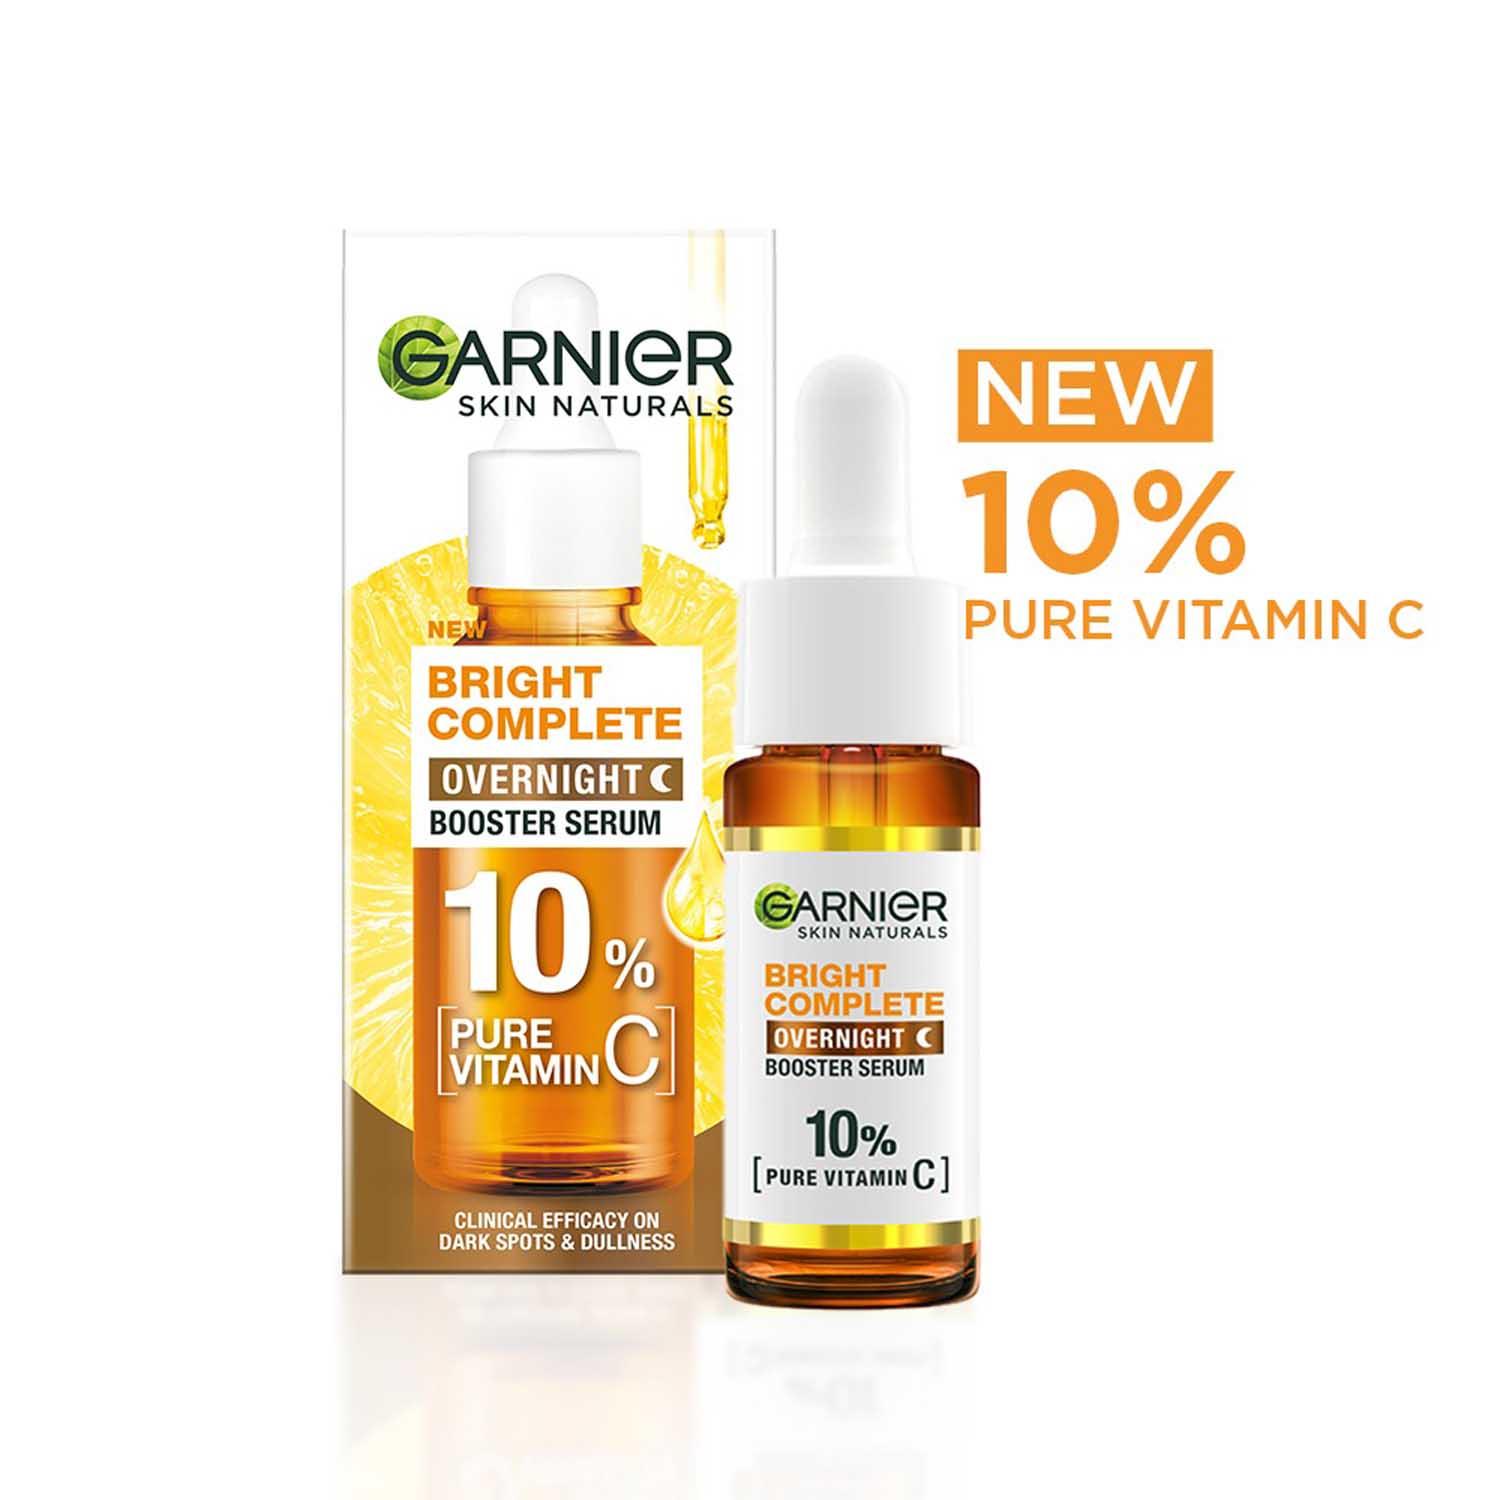 Garnier | Garnier Bright Complete Night Vitamin C Serum With 10% Vitamin C For Bright Skin (15 ml)